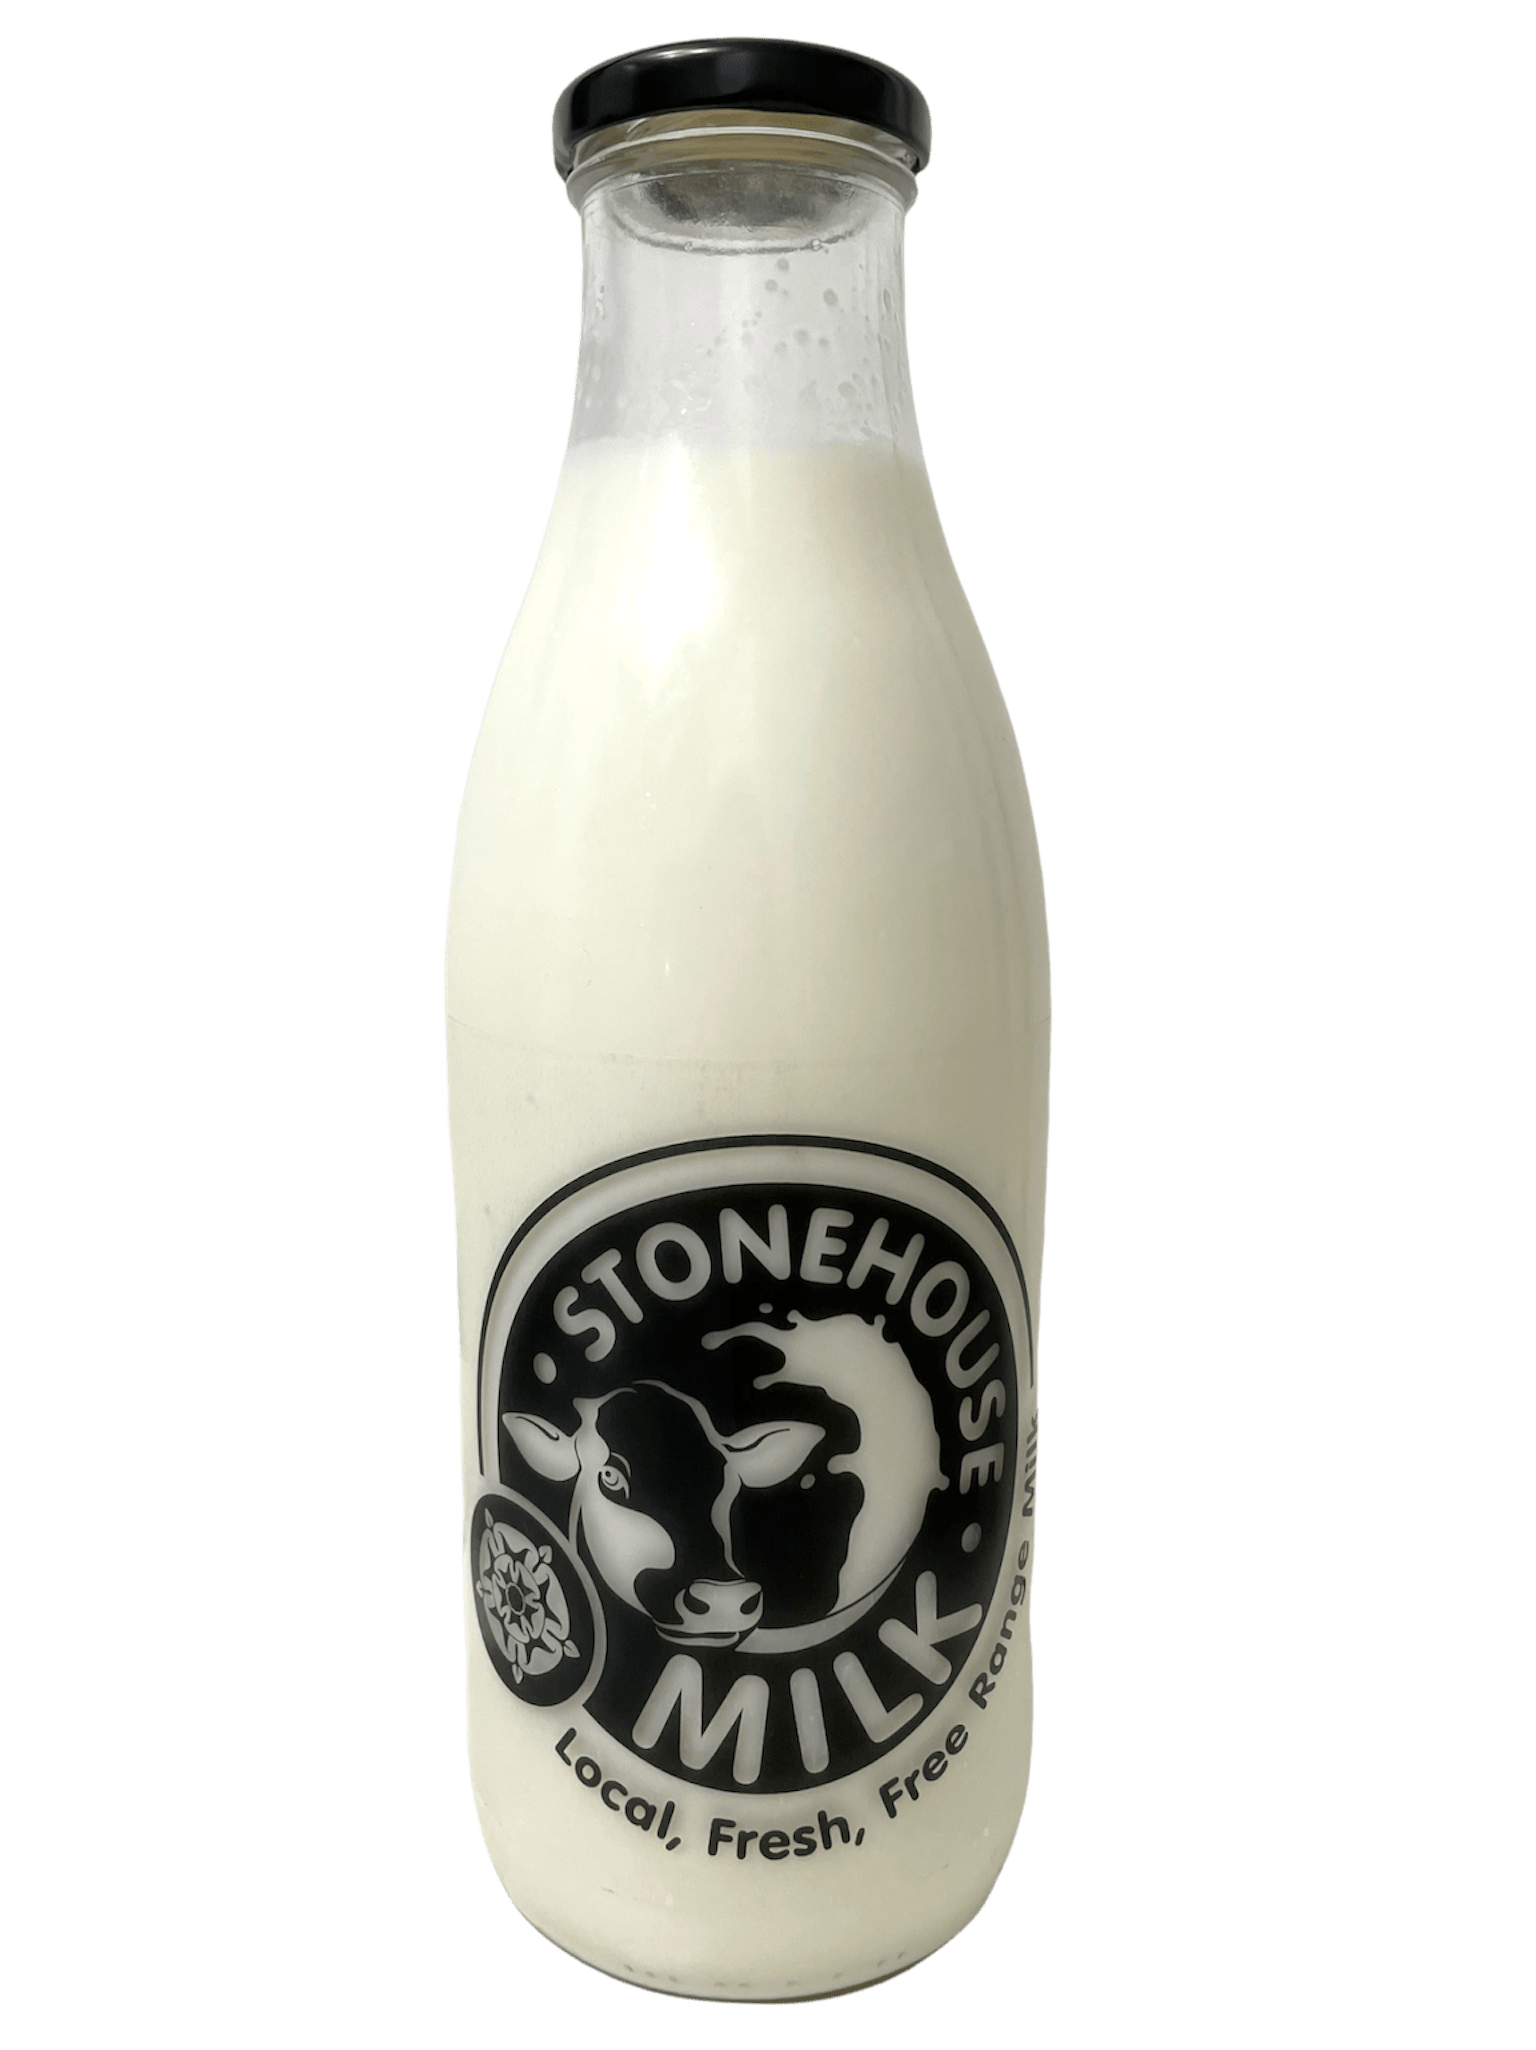 Stonehouse Milk - Kelis the Bottle Bank www.Kelis.info